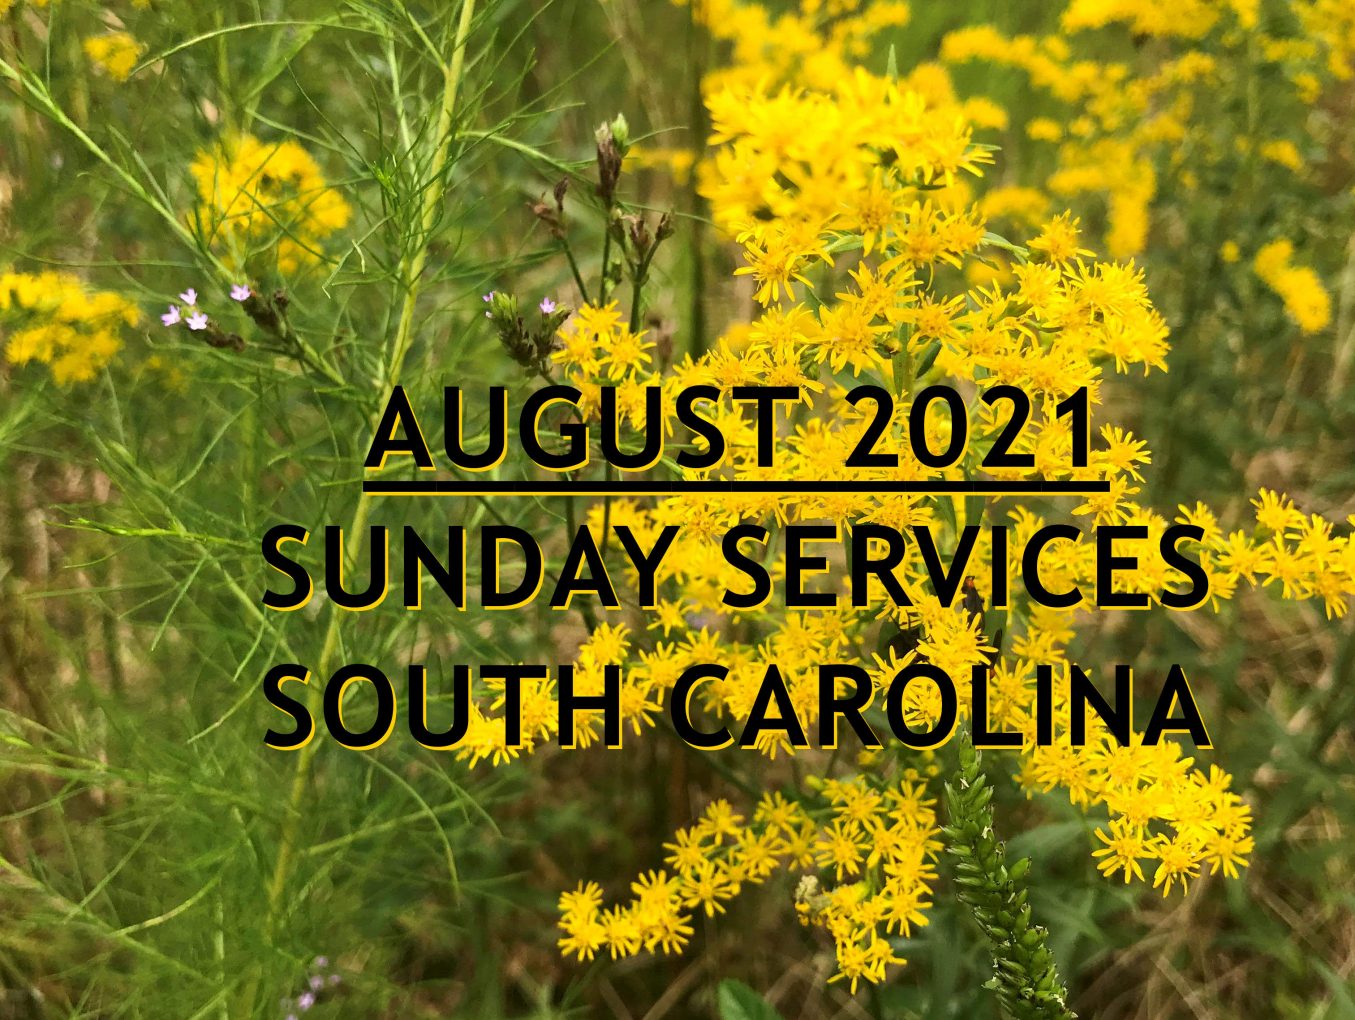 August 2021 South Carolina Sunday Services